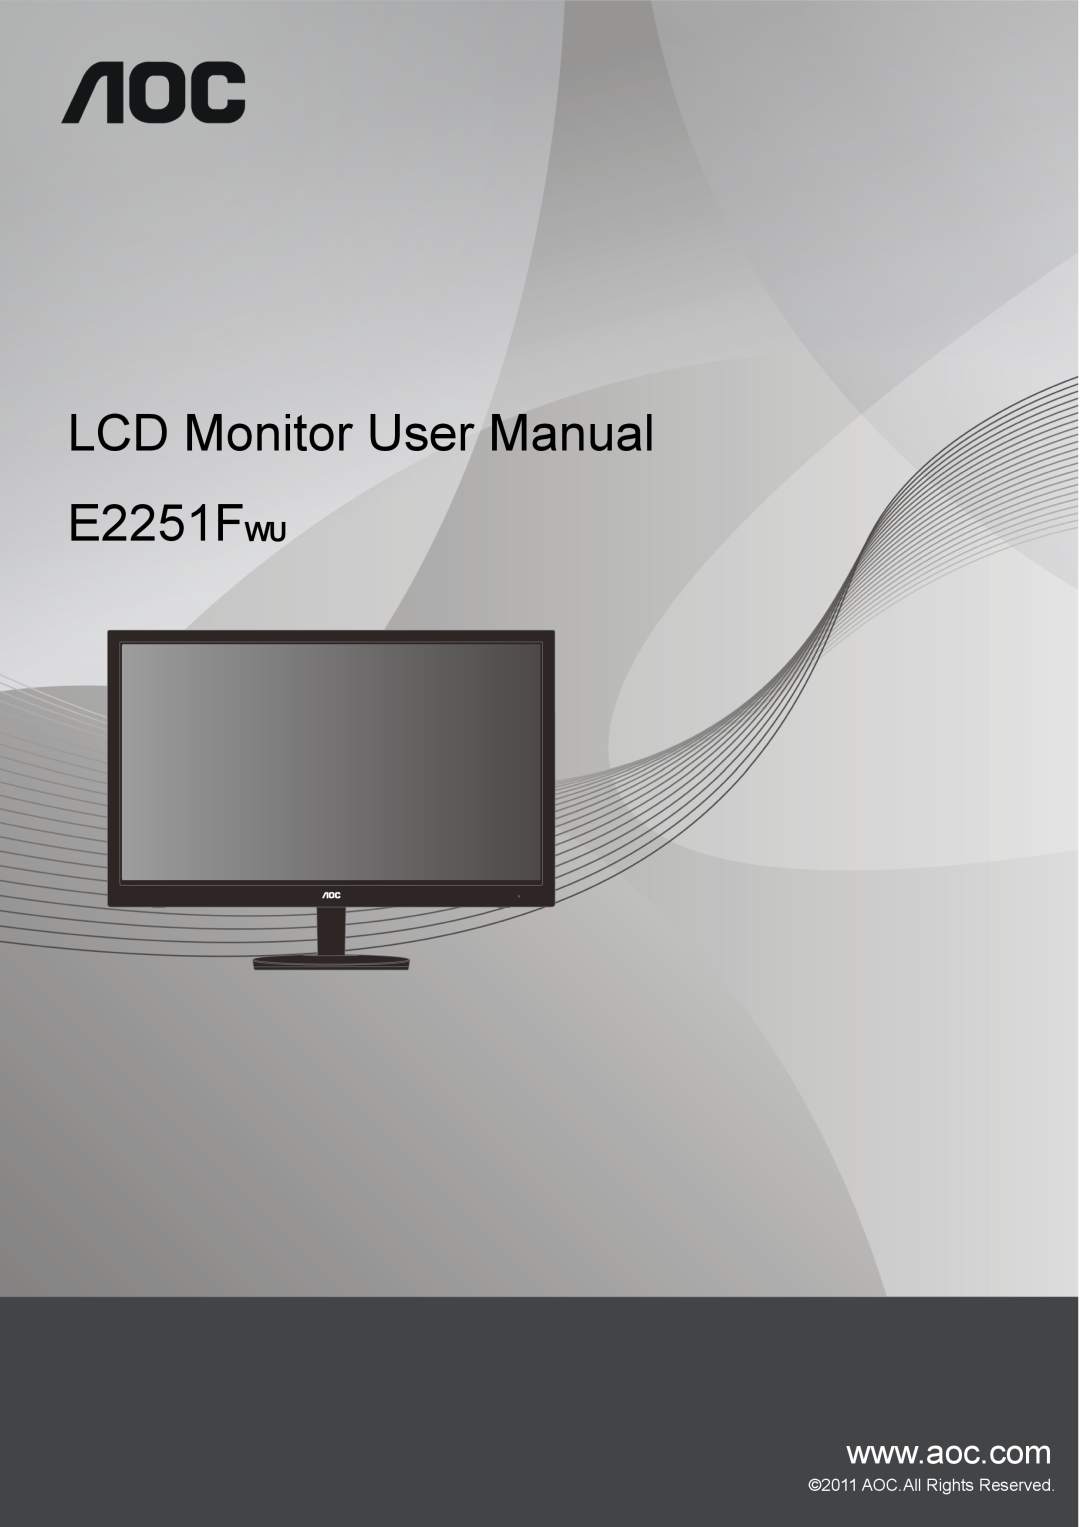 AOC user manual LCD Monitor User Manual E2251FWU, 2011 AOC.All Rights Reserved 